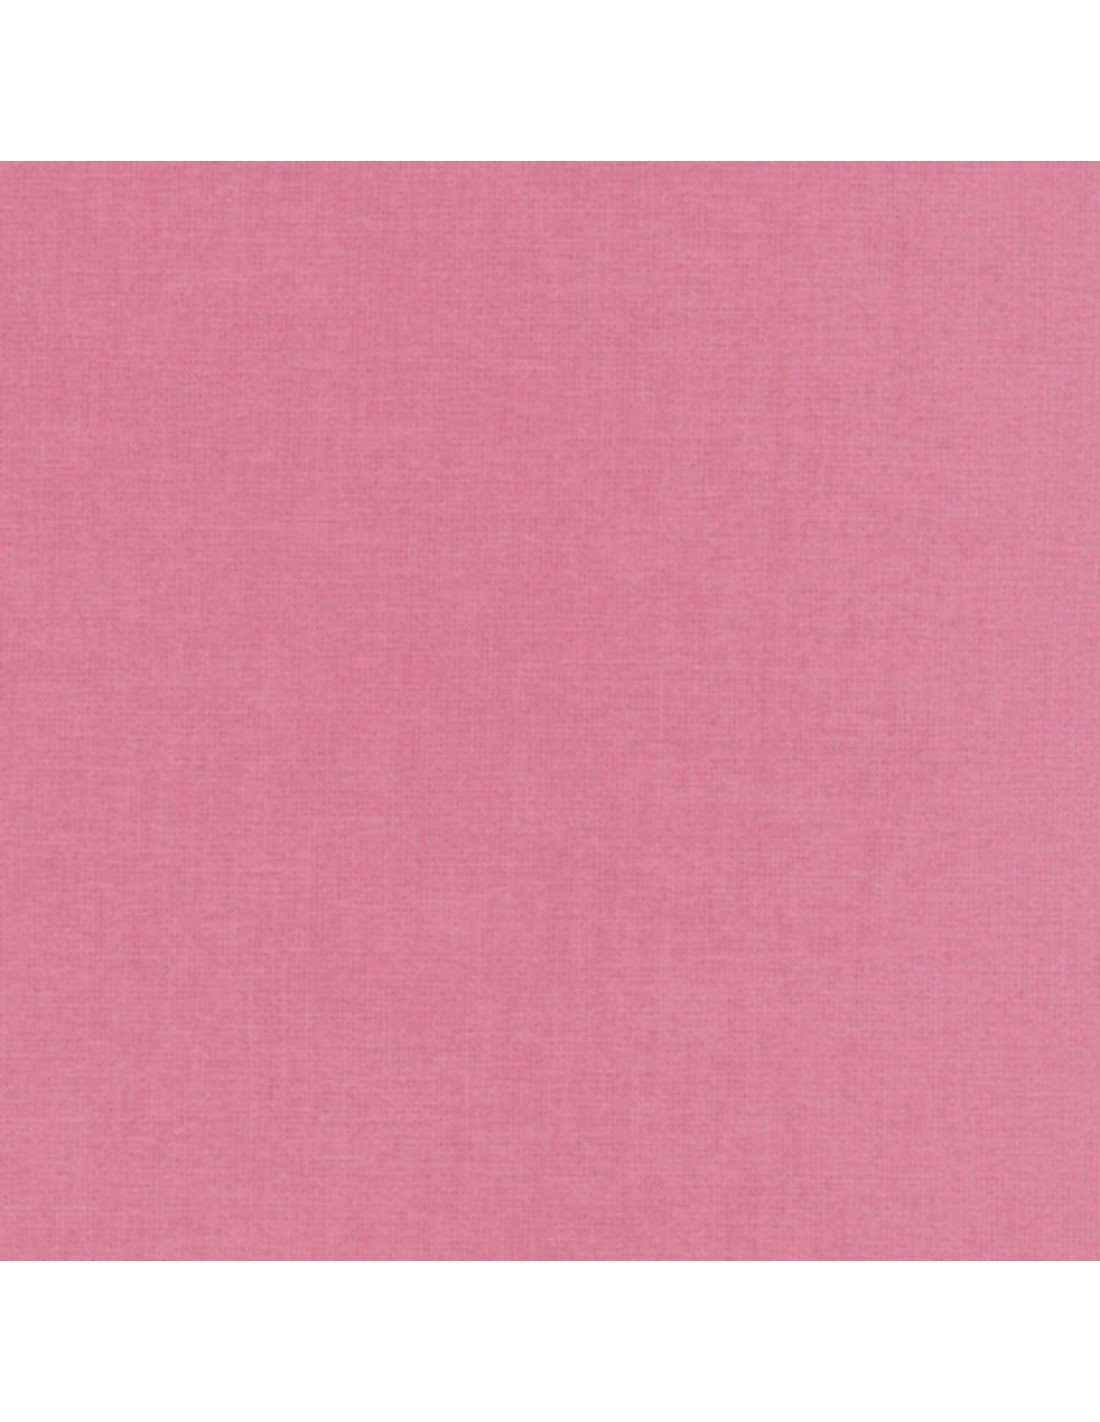 Pink Fabric, Cerise Fabric, Cotton Shot, Raspberry Pink, Solid Cotton  Fabric, Denim Print, Cotton Basics, by Benartex, 9636-29